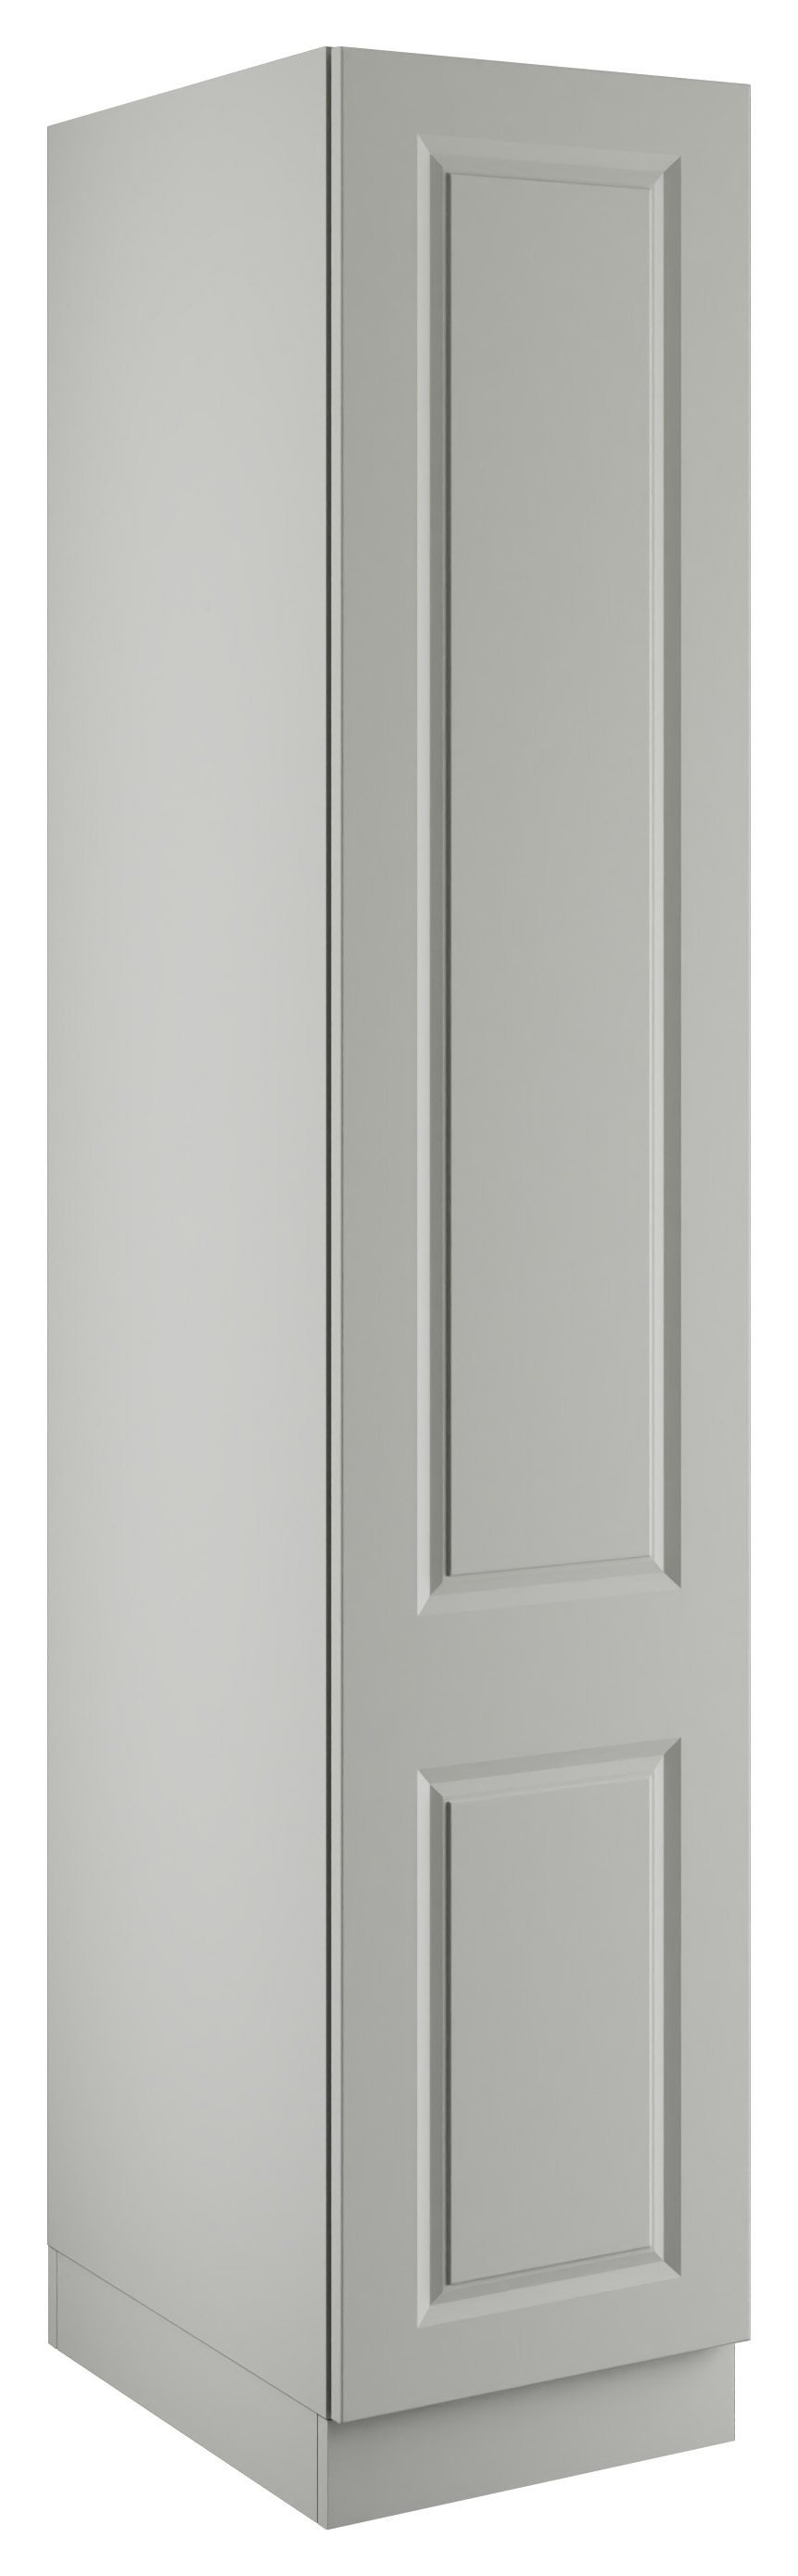 Harrogate Light Grey Single Wardrobe with Shelves - 450 x 2260 x 608mm